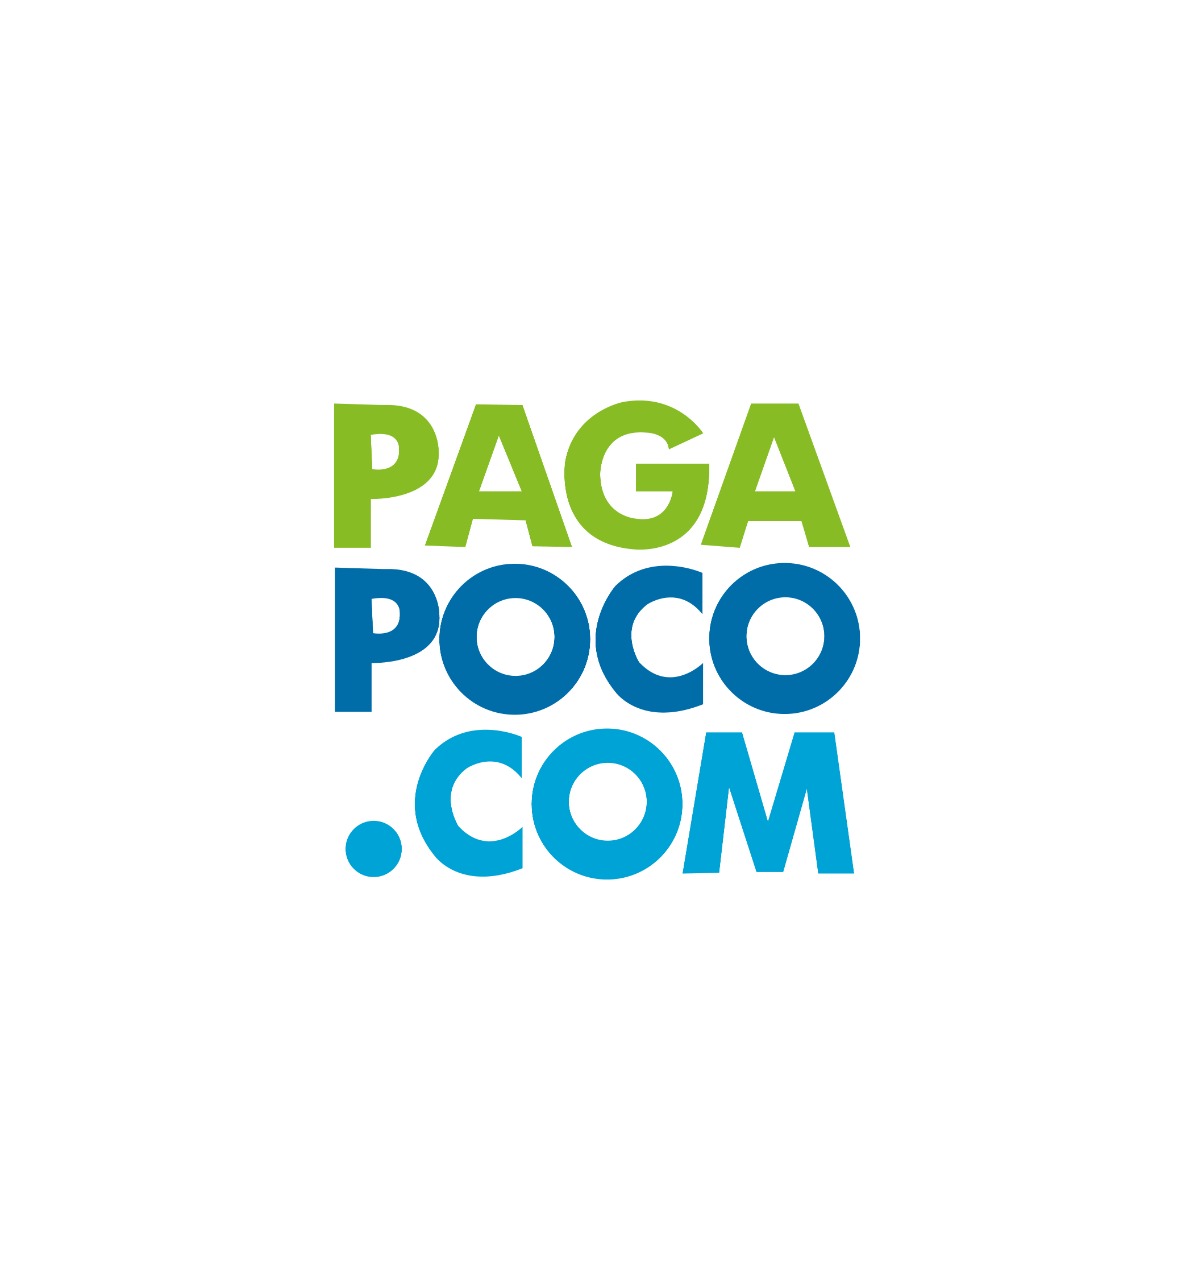 Pagapoco